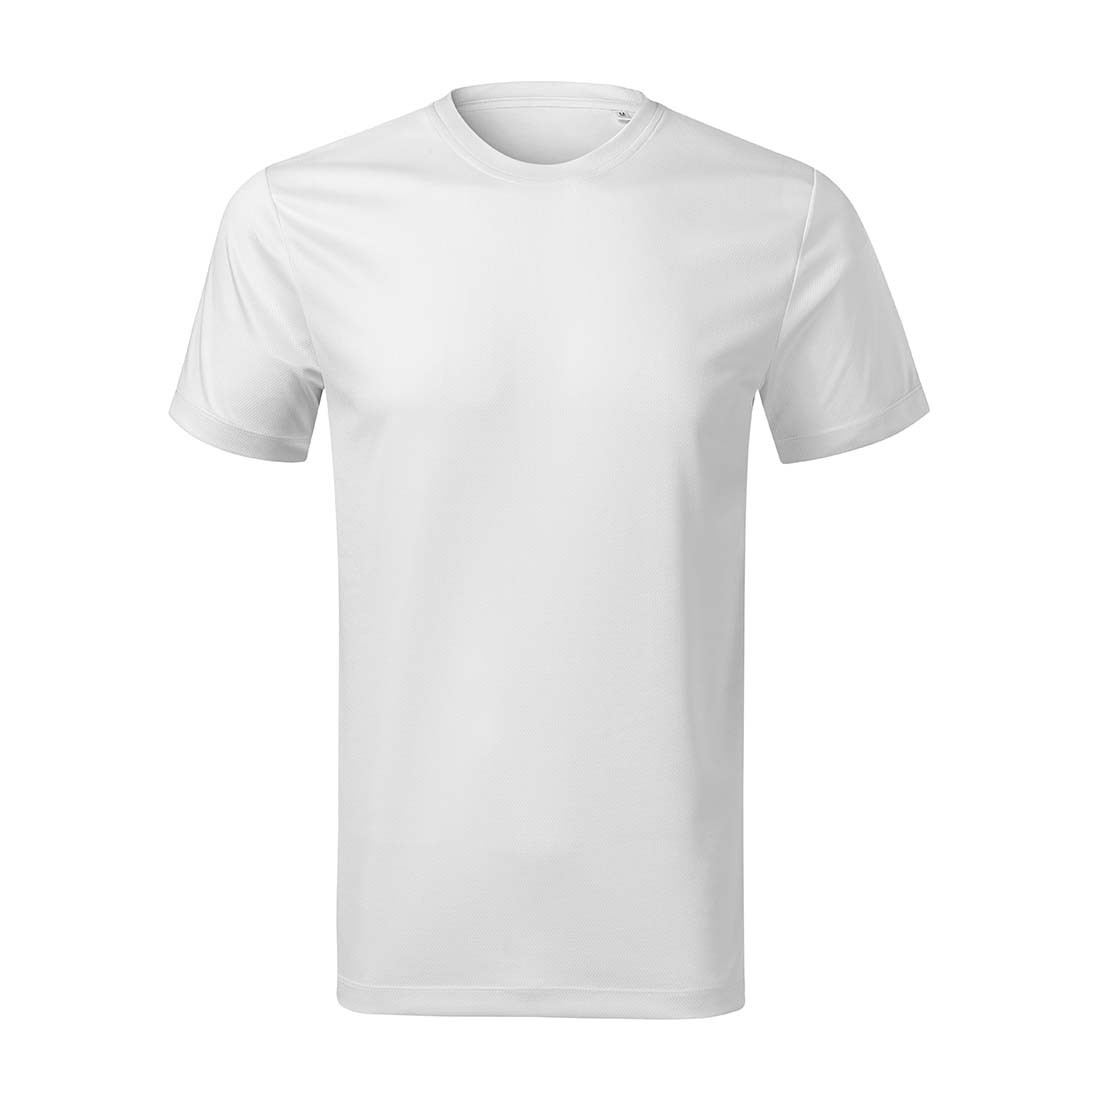 Men's T-shirt - Safetywear